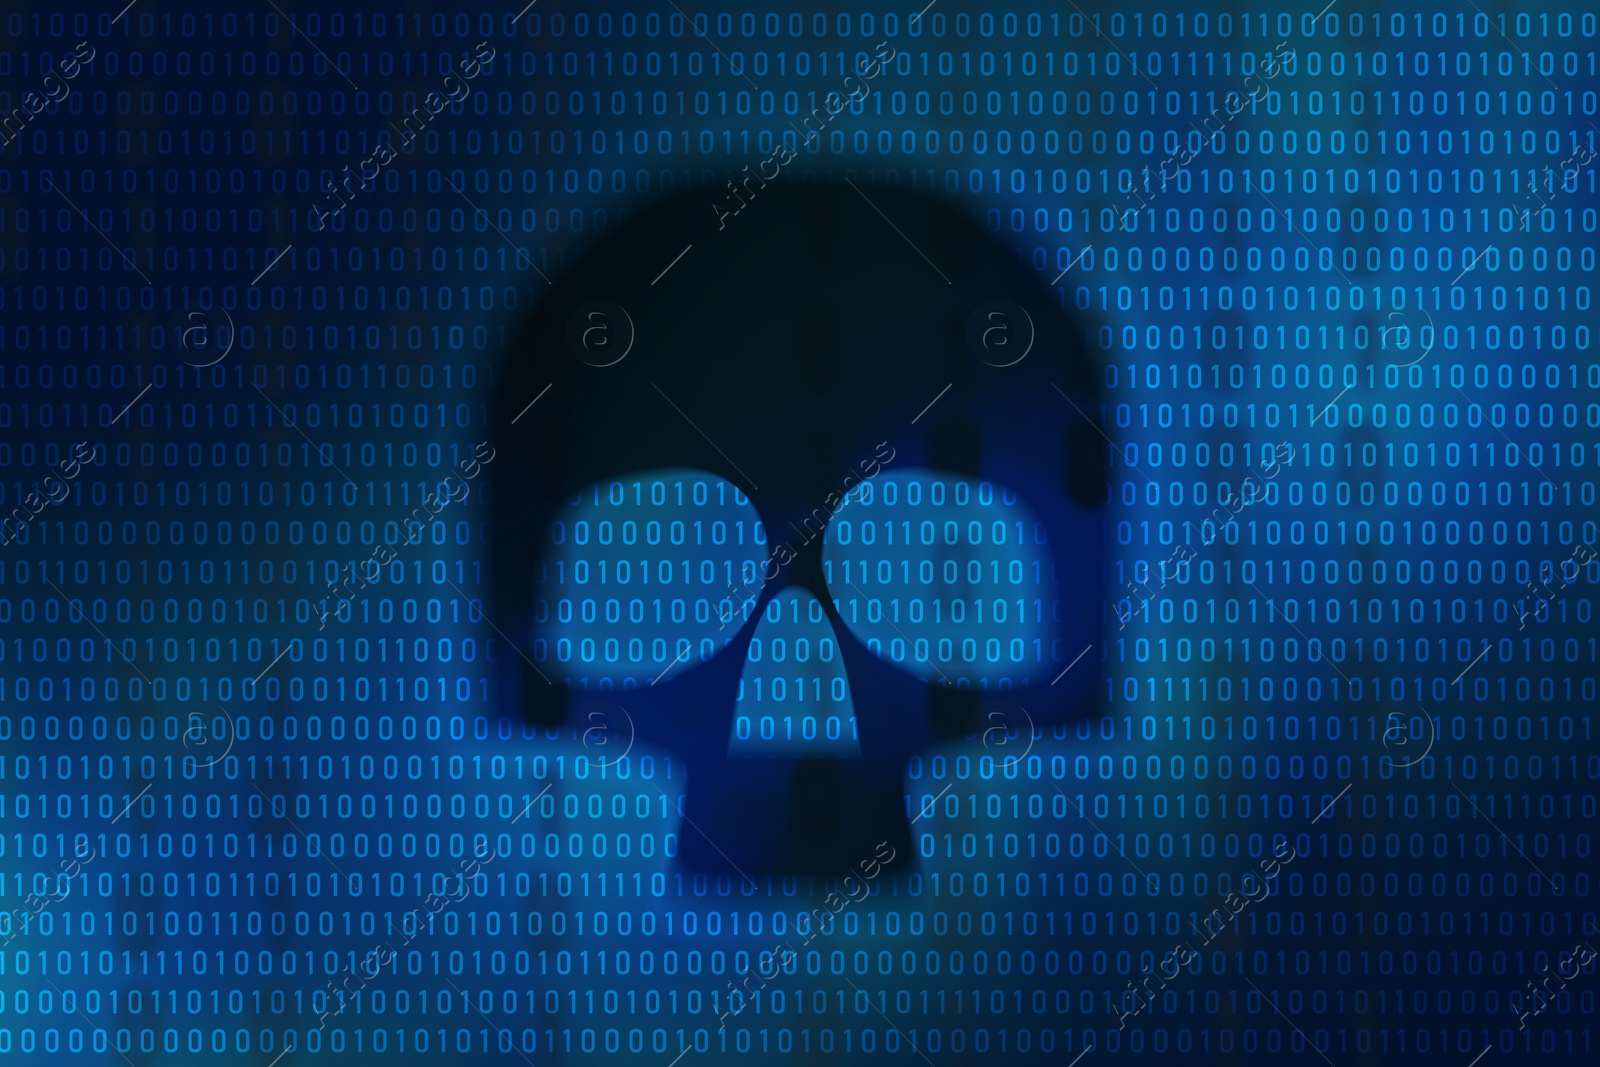 Illustration of Dark skull on digital binary code background. Cyber attack prevention concept